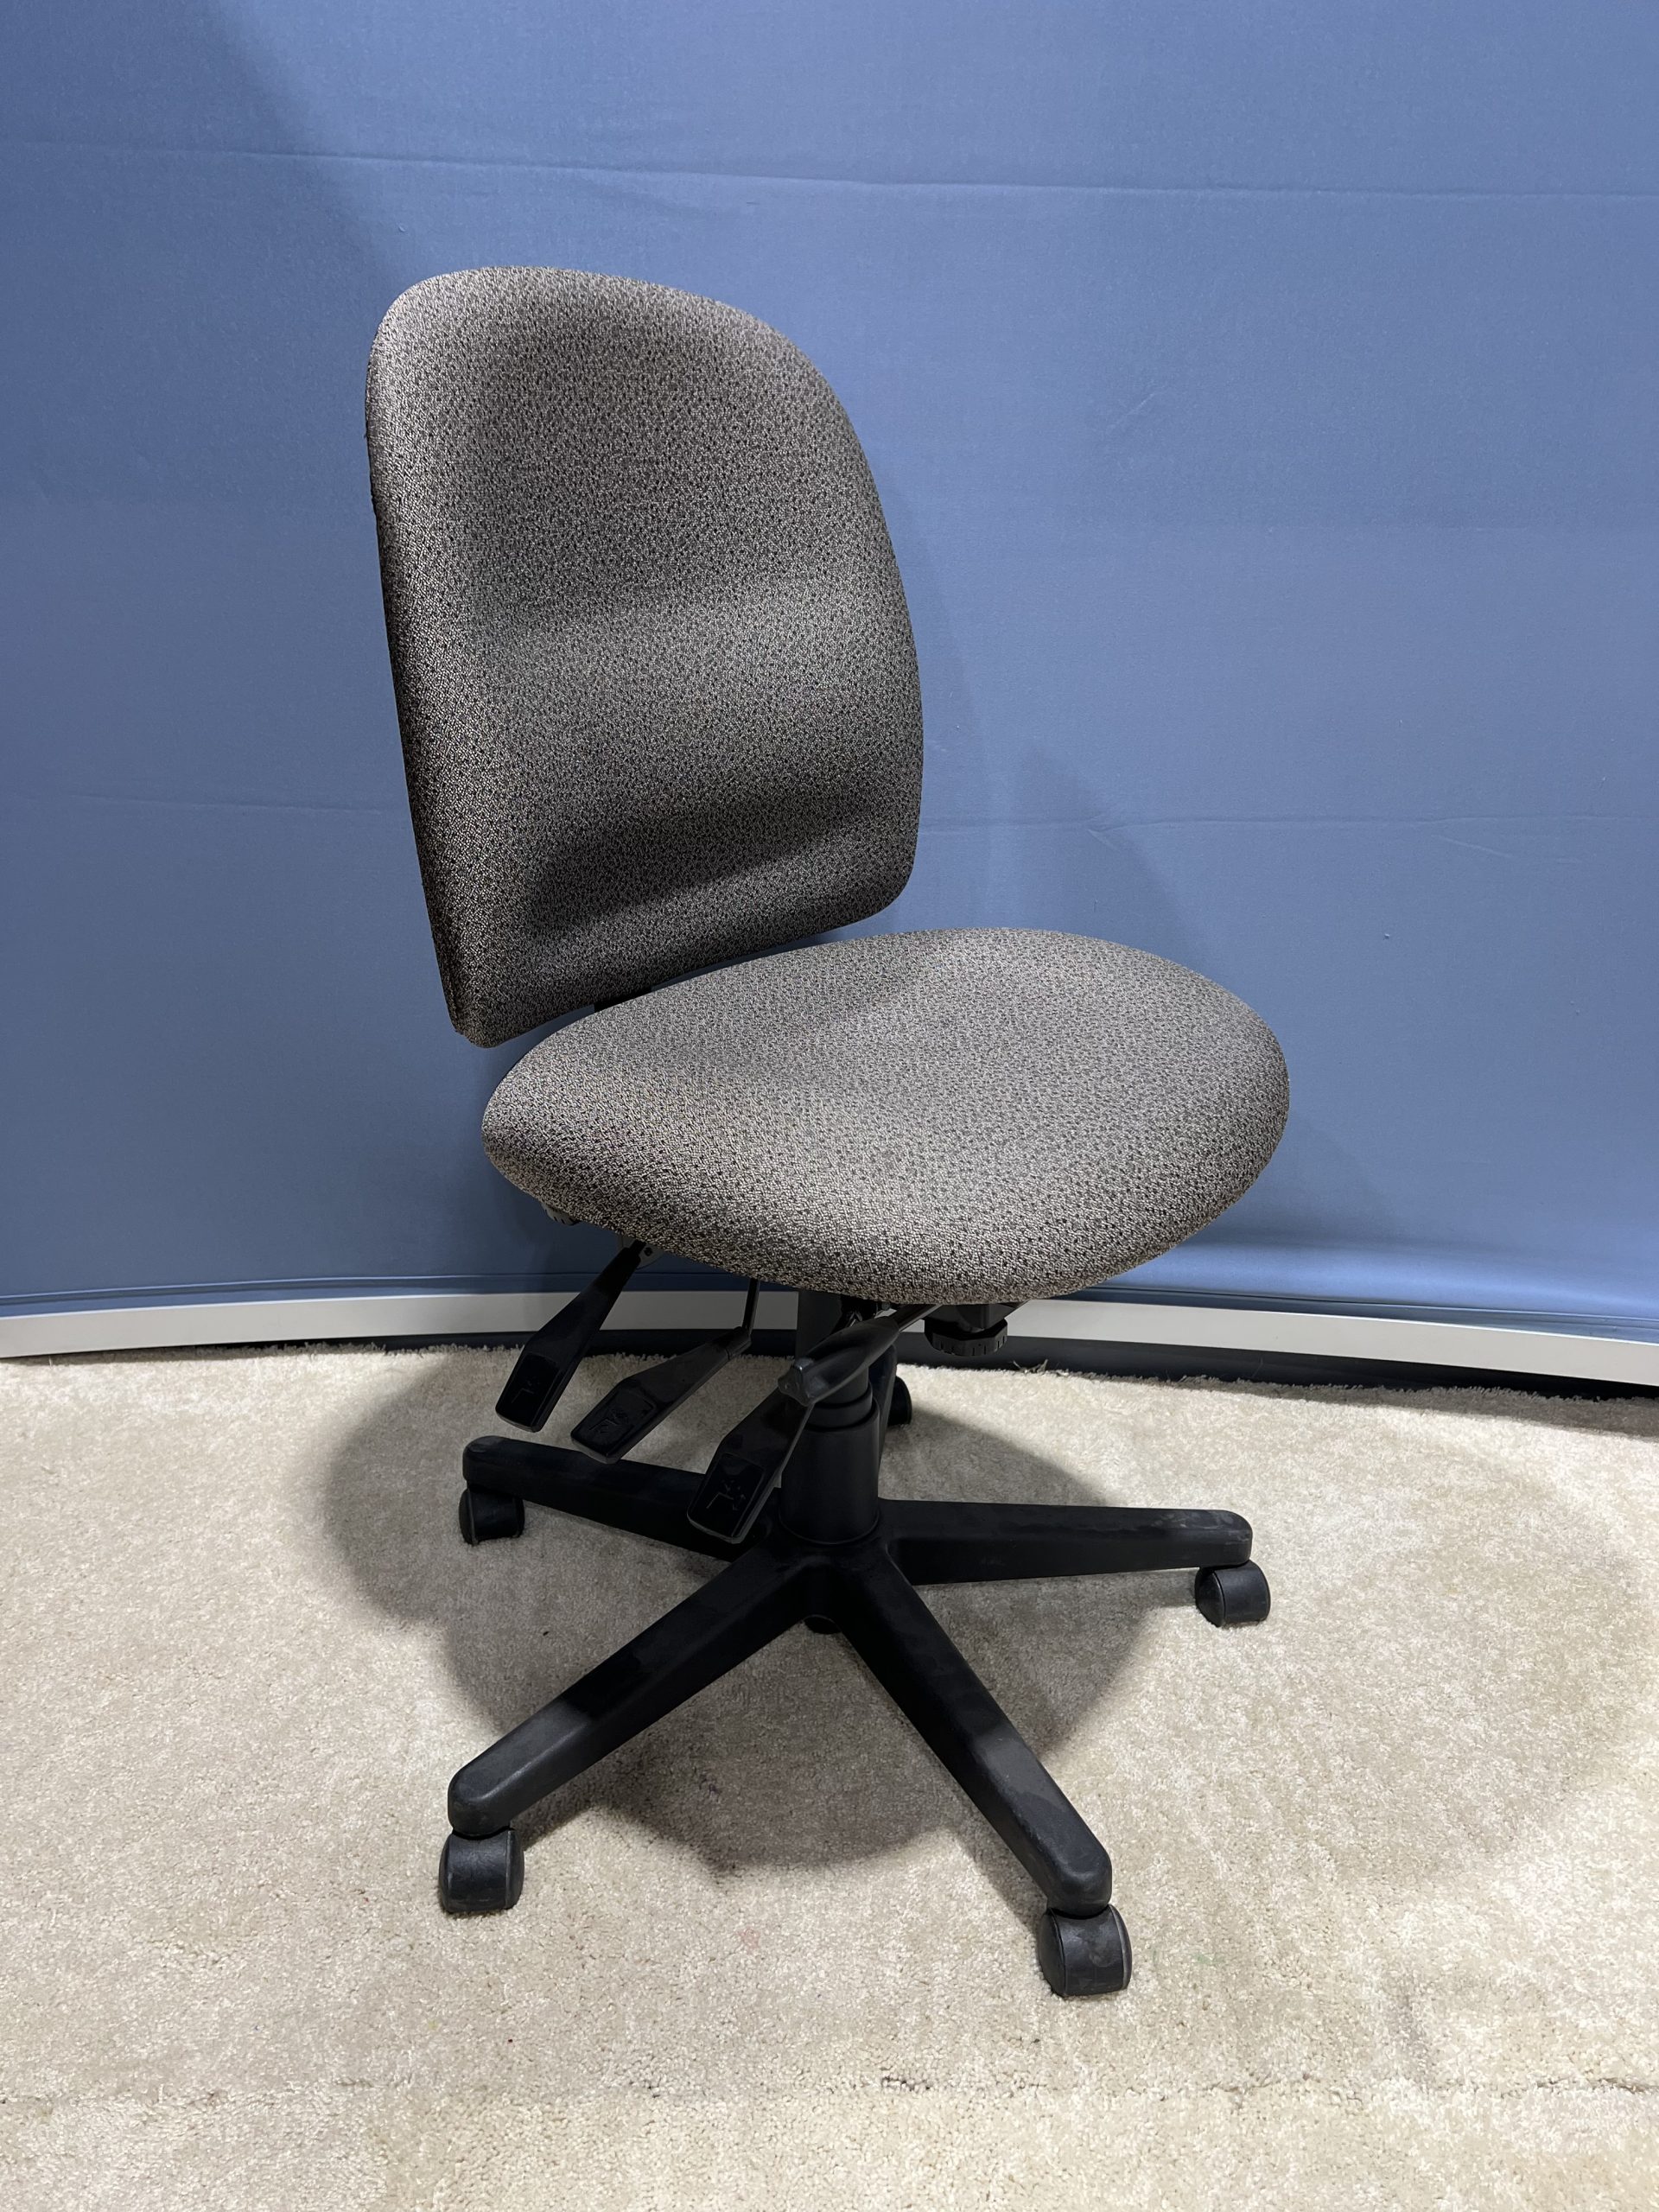 Chair Multitask Dark Gray Black No Arms 1 of 1-image